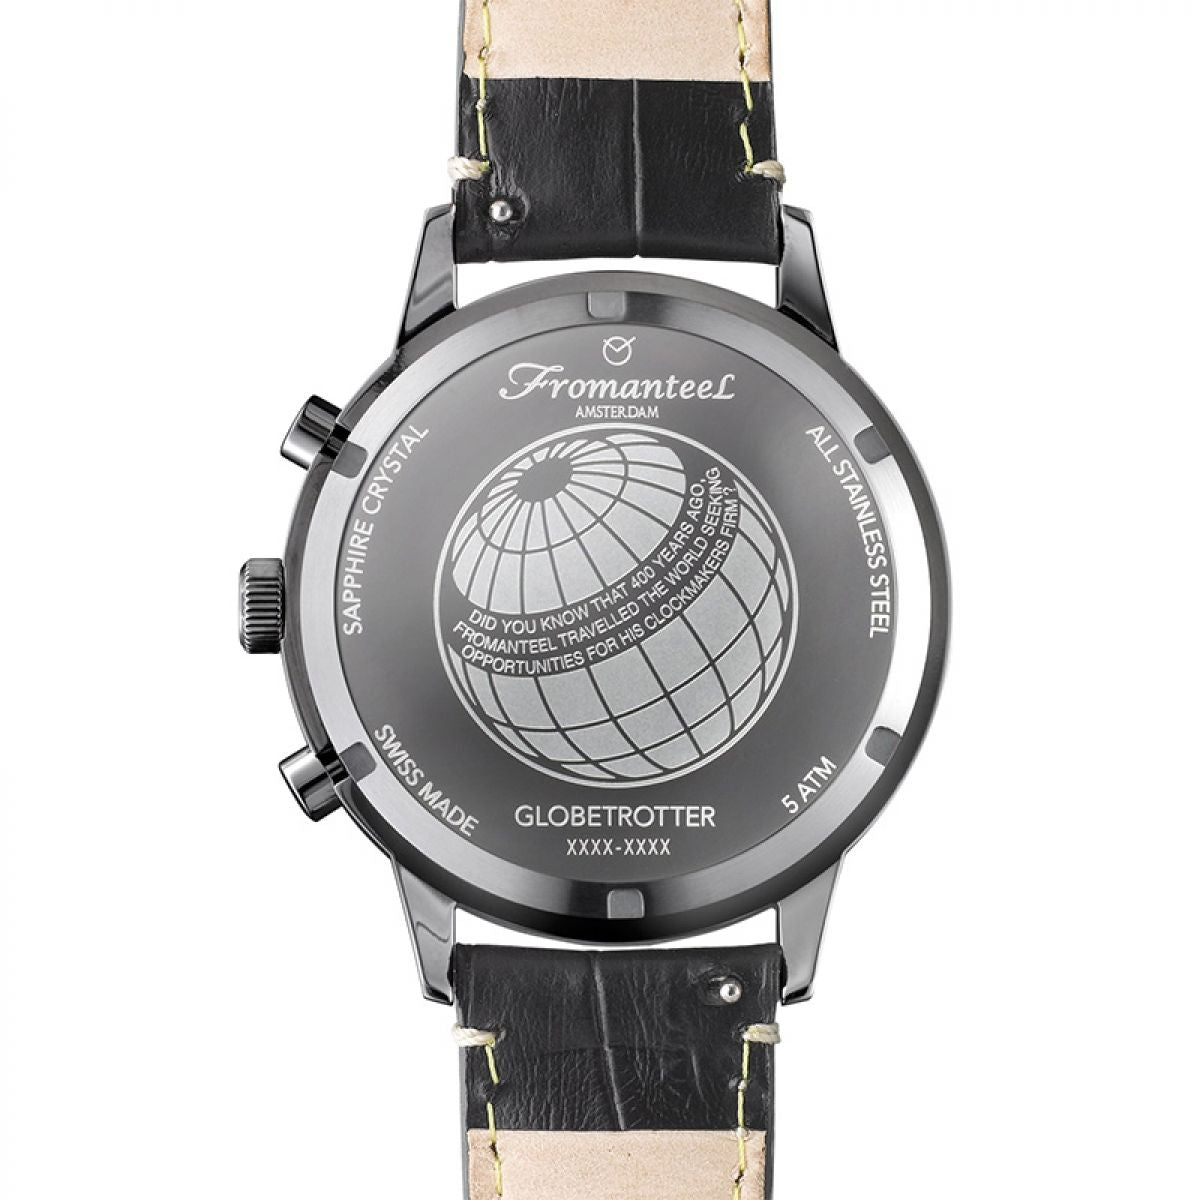 Refurbished Fromanteel Globetrotter Chrono GT-0701-001 Heren Horloge 42mm